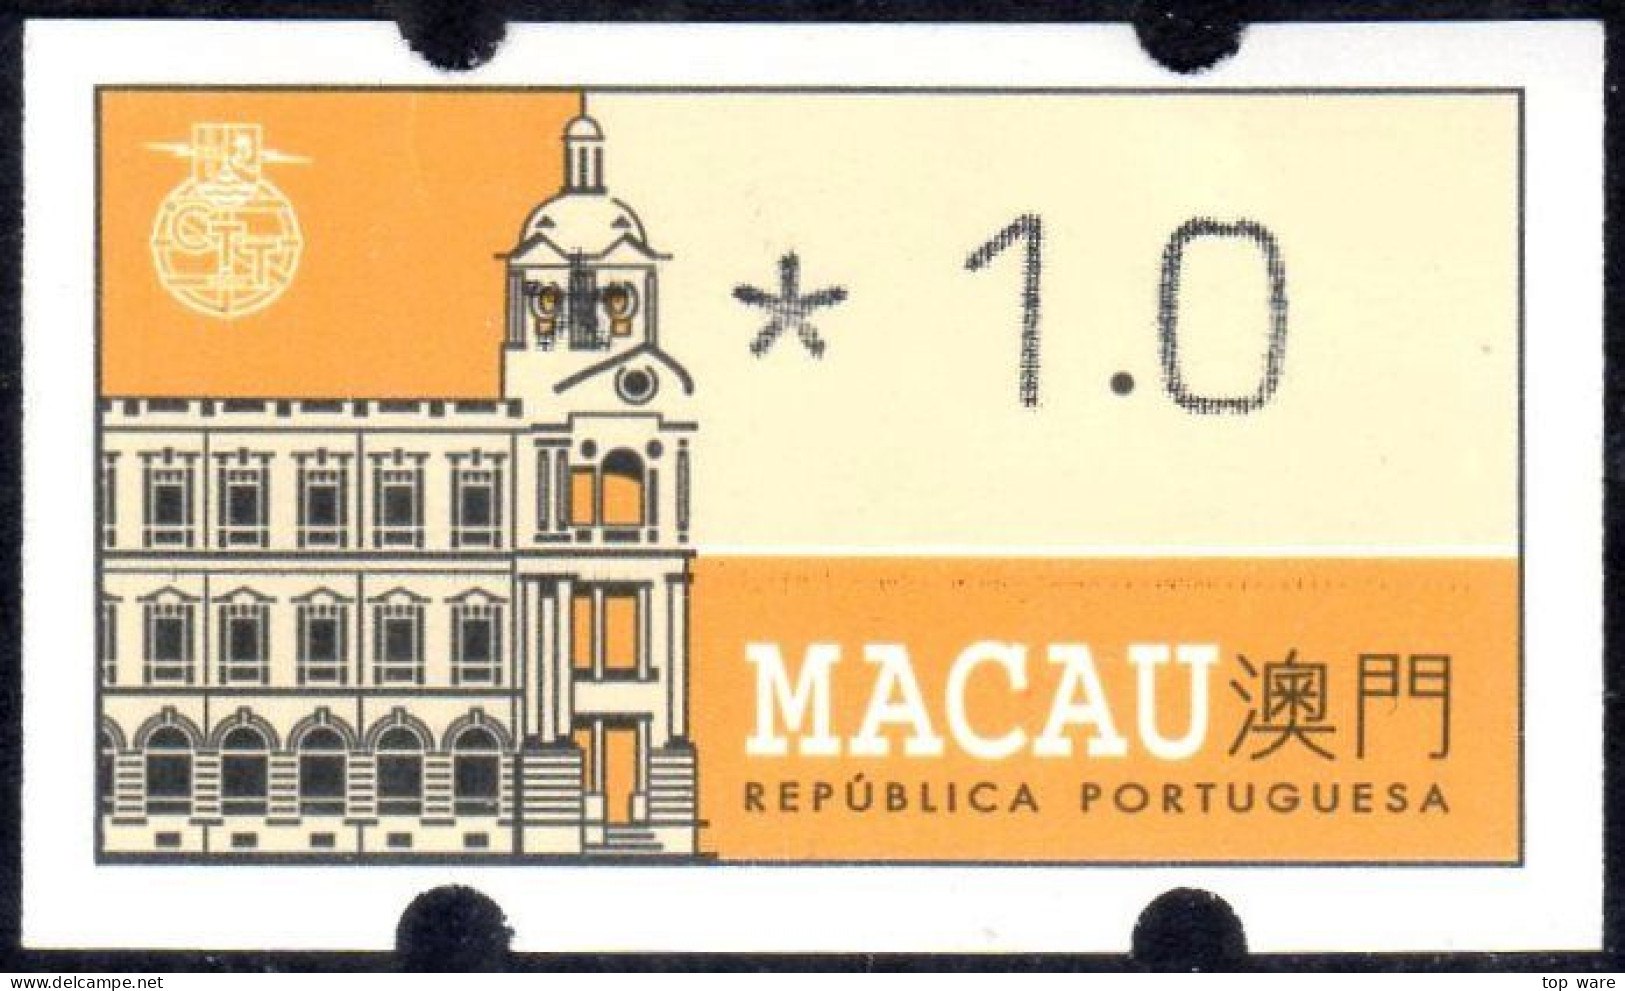 1993 China Macau ATM Stamps Main Post Office / MNH / Klussendorf Automatenmarken Etiquetas Automatici Distributeur - Distribuidores